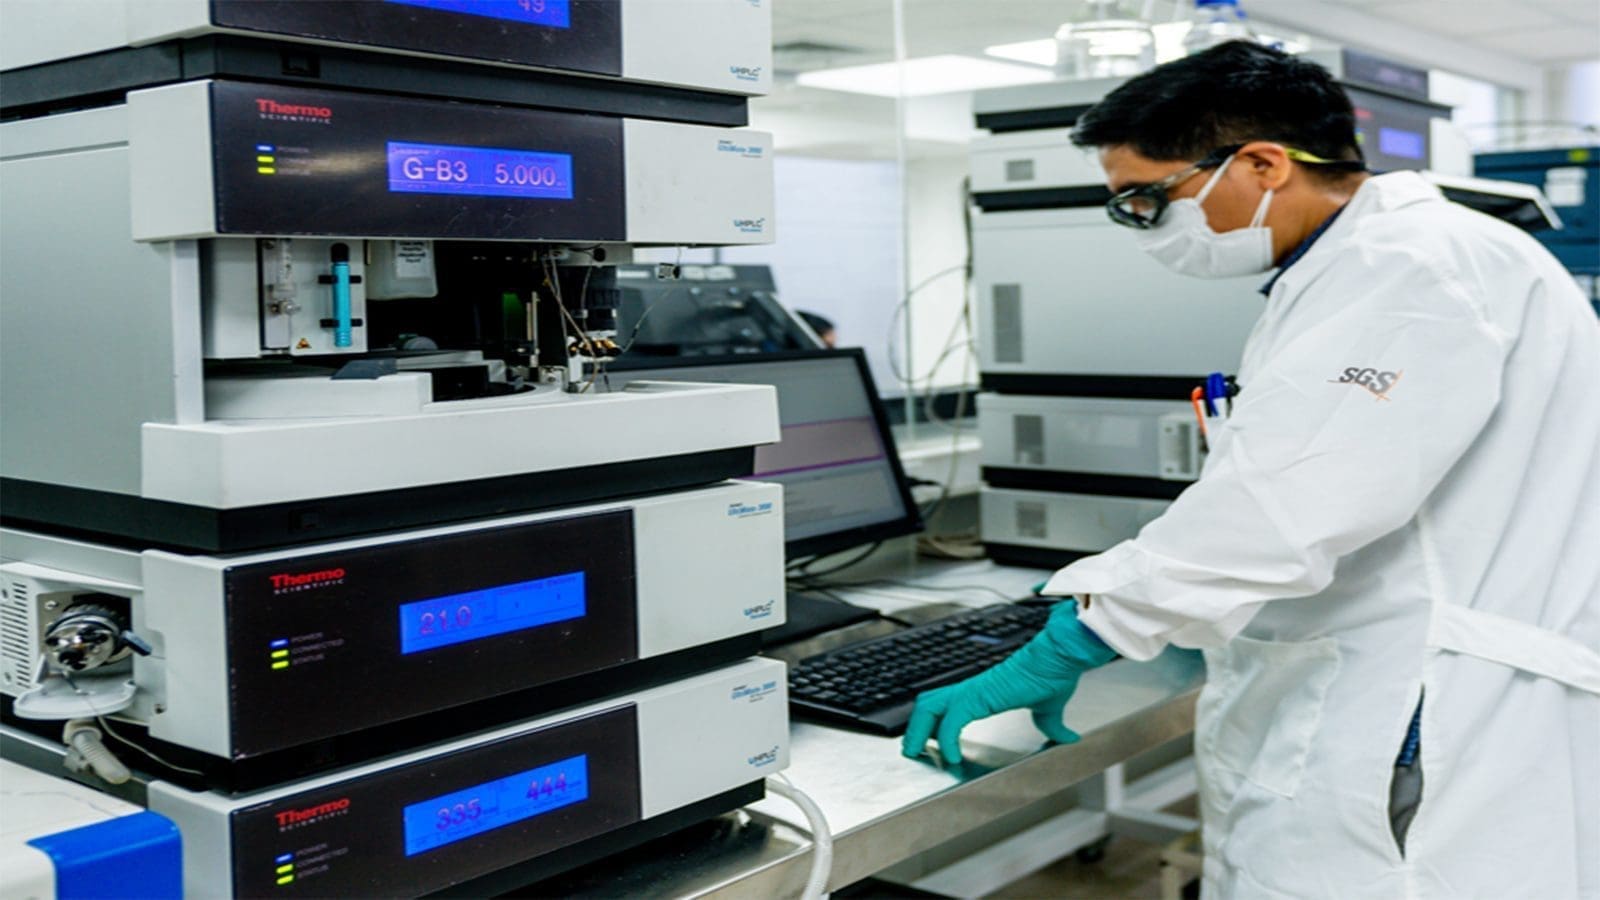 SGS renovates Peru sustainability-focused food testing laboratory offering faster turnaround times